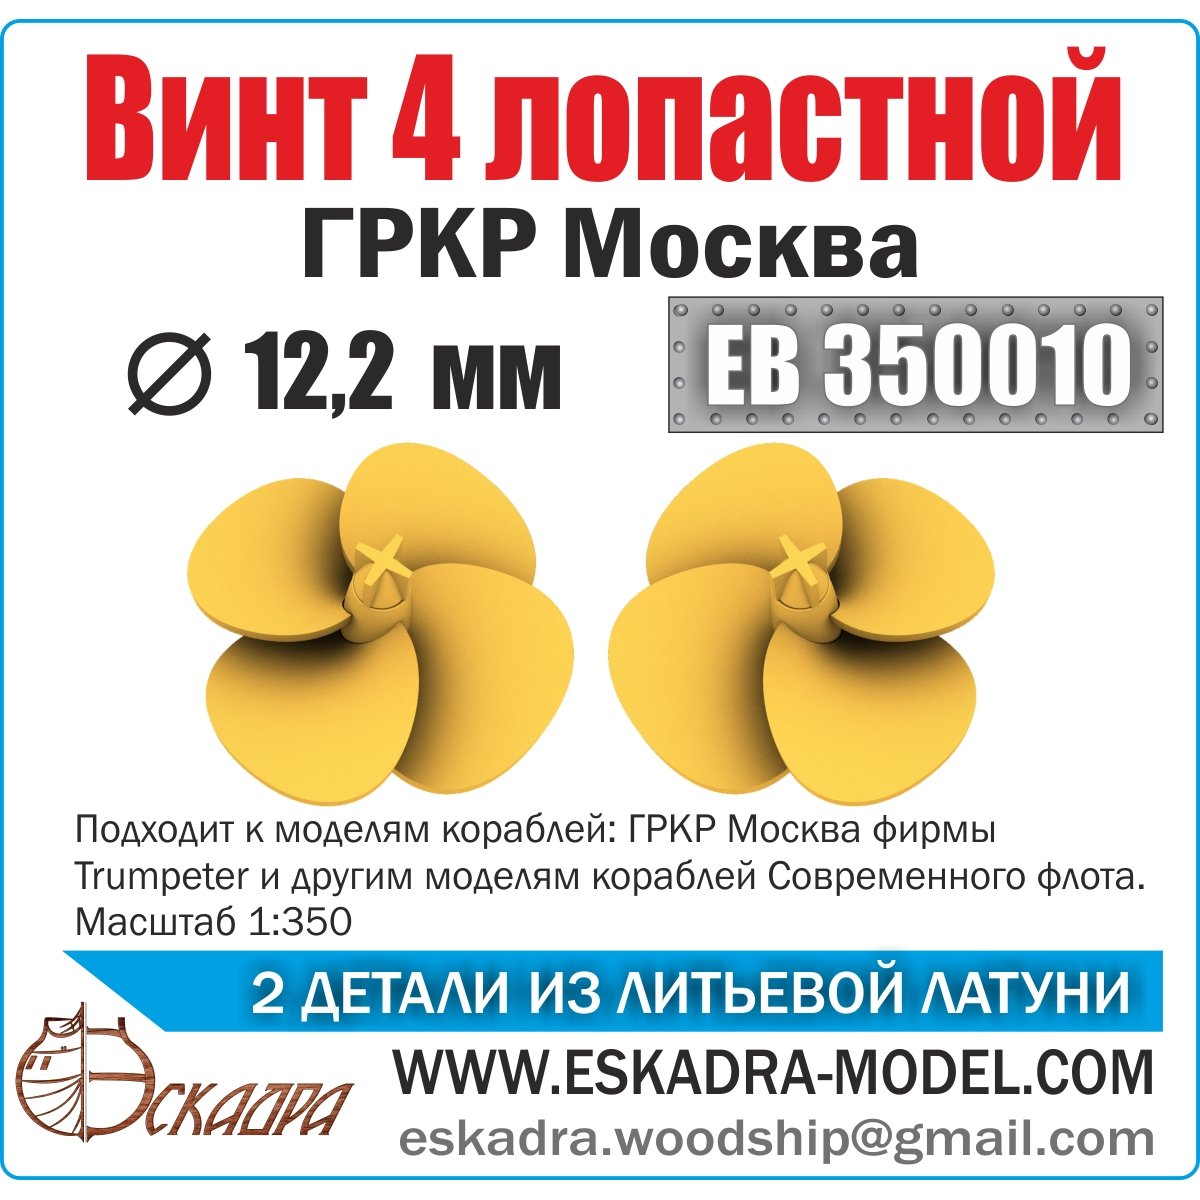 WHERT 4x blacat 12.2 mm GRCR Moscow (UP.2pcs) - imodeller.store